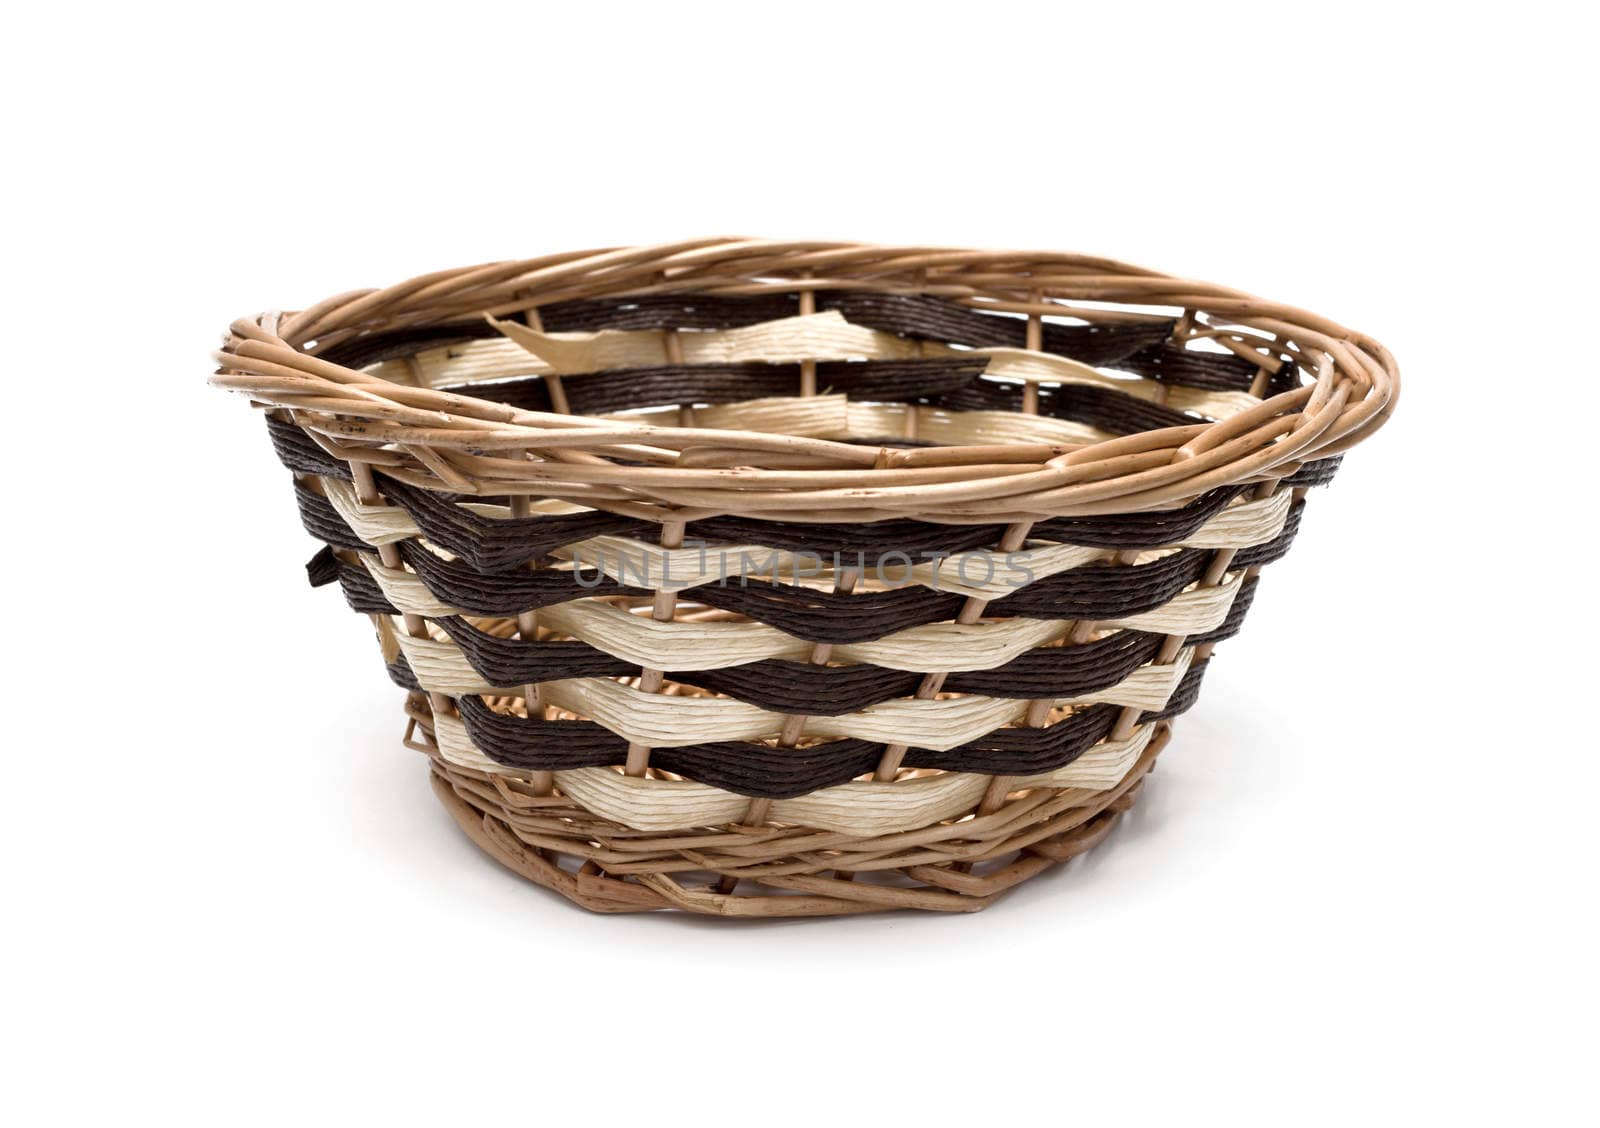 Basket on white background by DNKSTUDIO